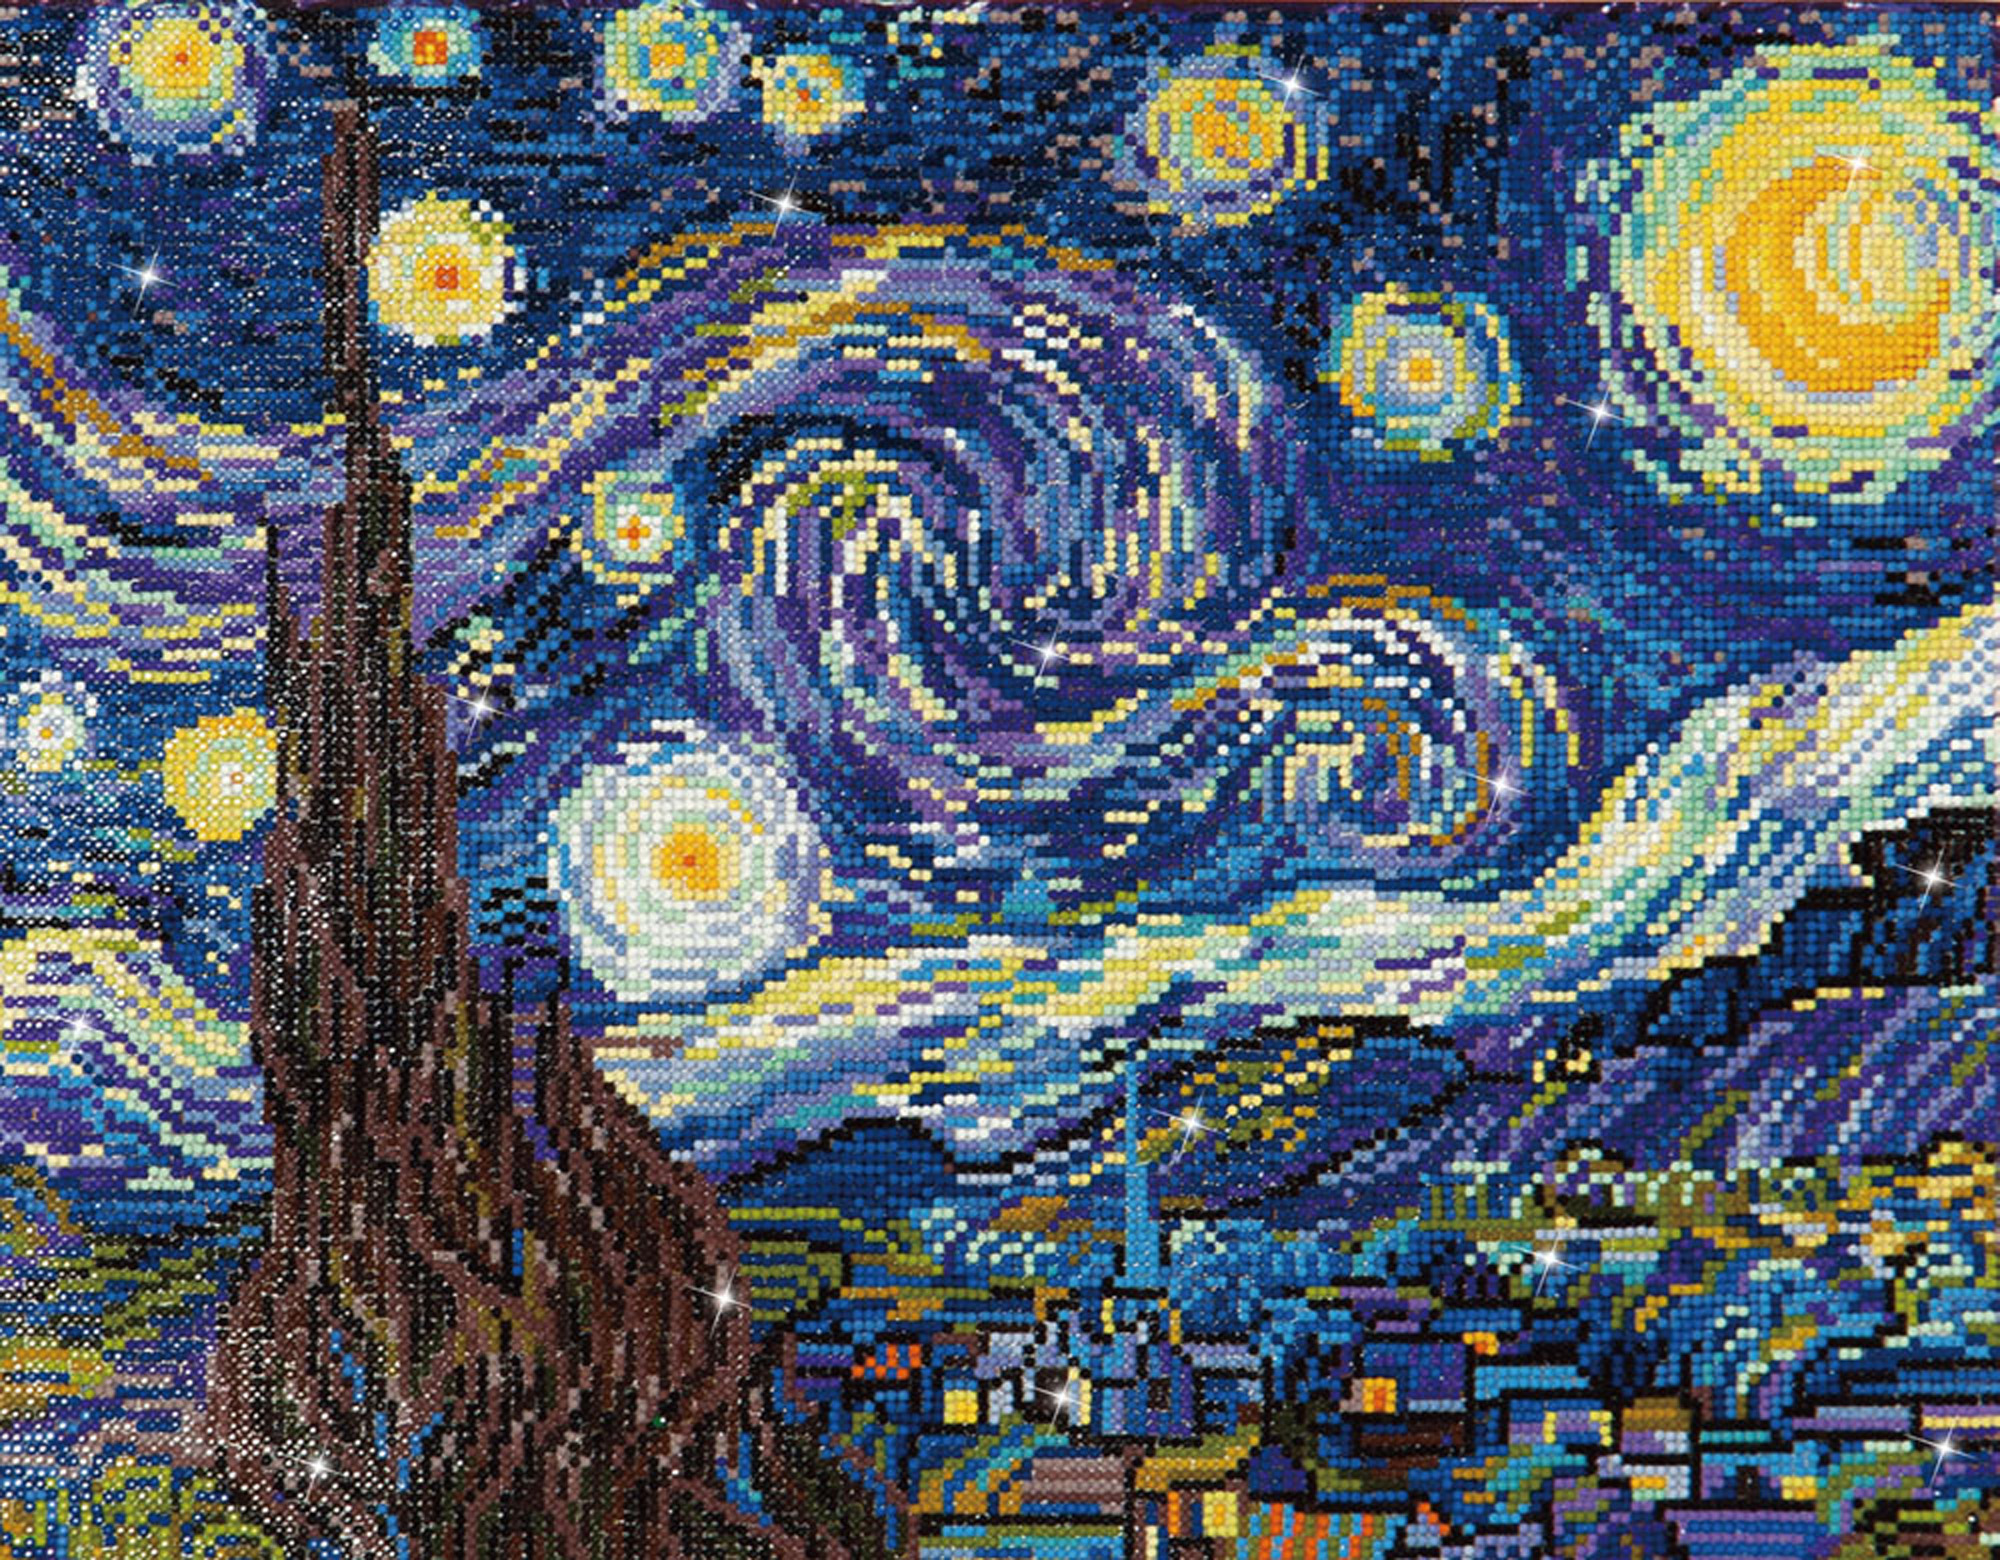 Starry Night (Van Gogh) - Diamond Art Kit - DD9.001 - Diamond Dotz®